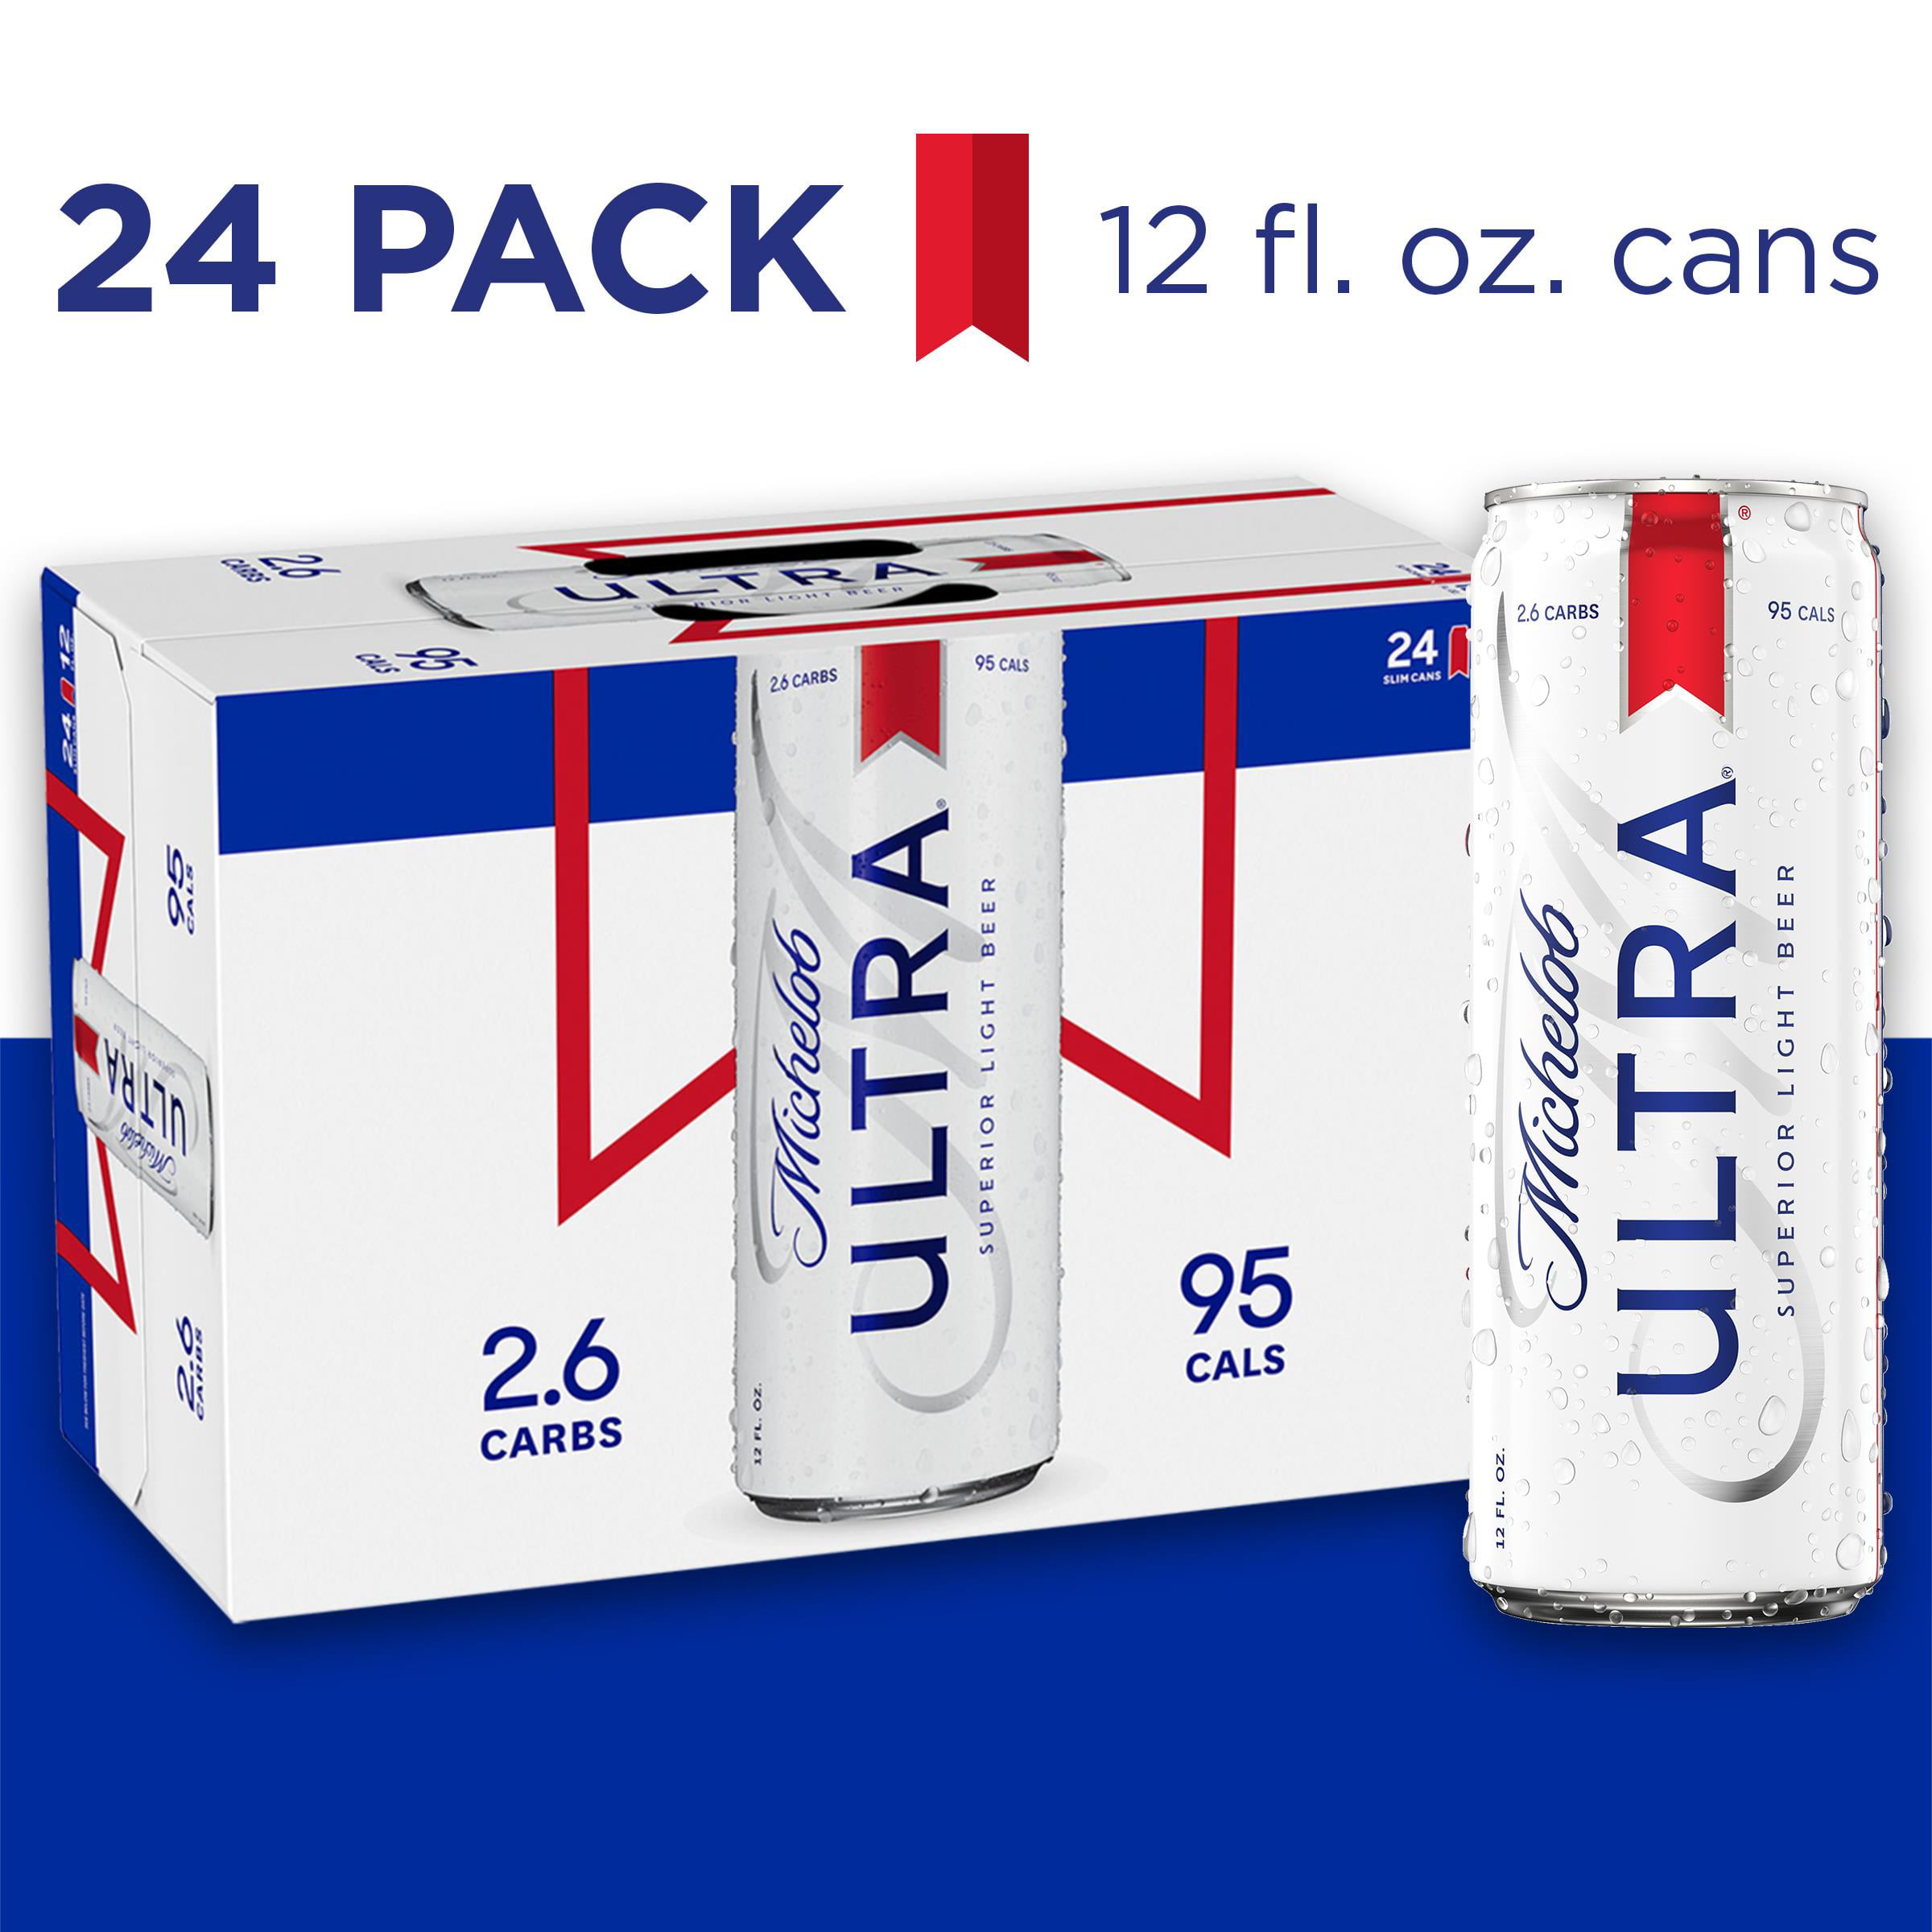 Michelob Ultra Light Beer 24 Pack Beer 12 Fl Oz Cans